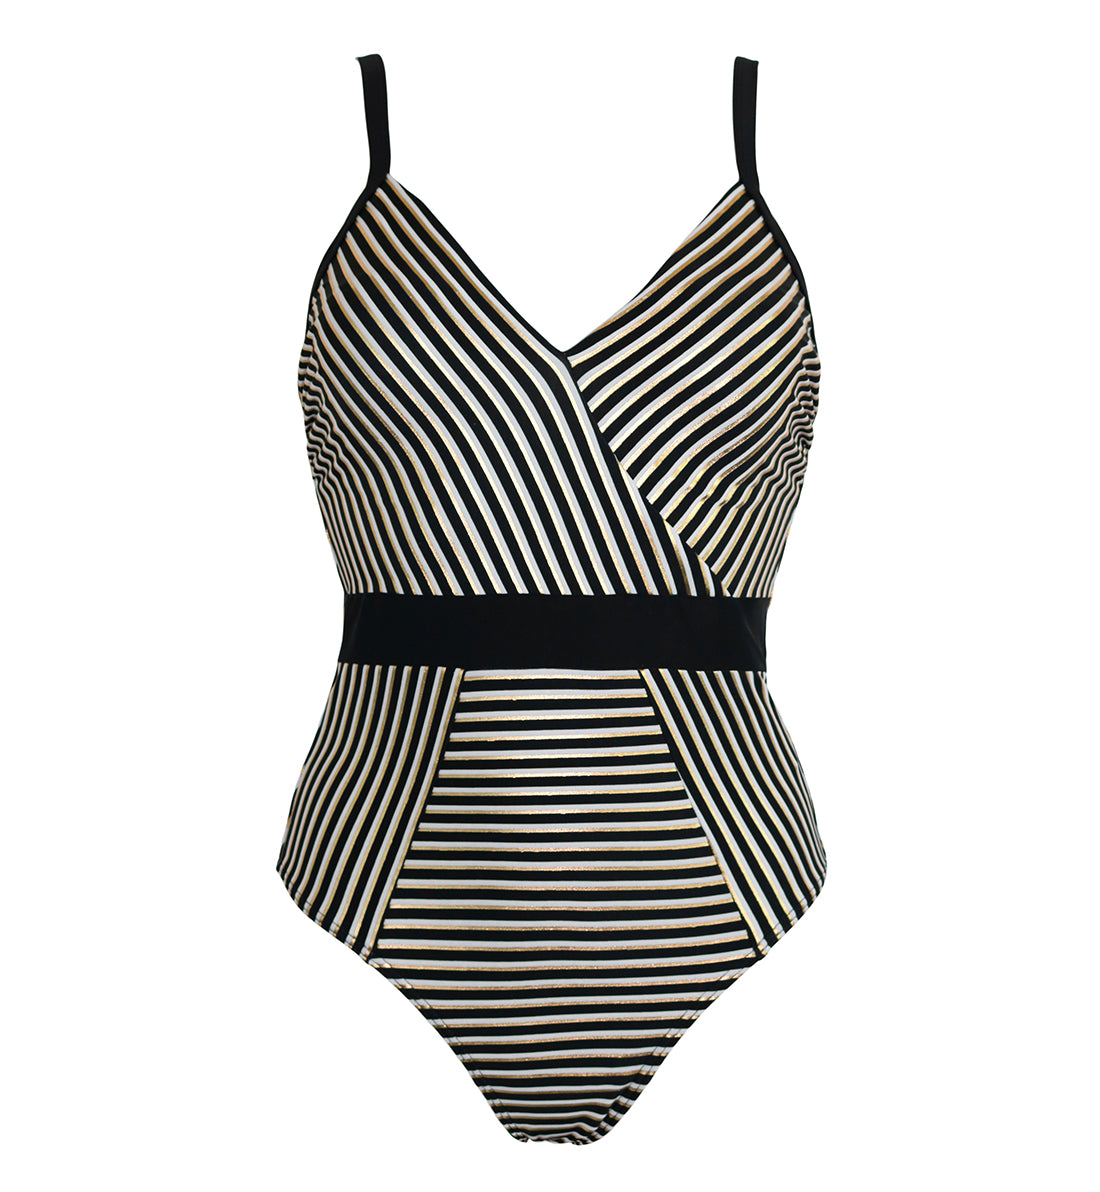 Pour Moi Radiance V Neck Control Swimsuit (24706),XS,Black/White/Gold - Black/White/Gold,XS